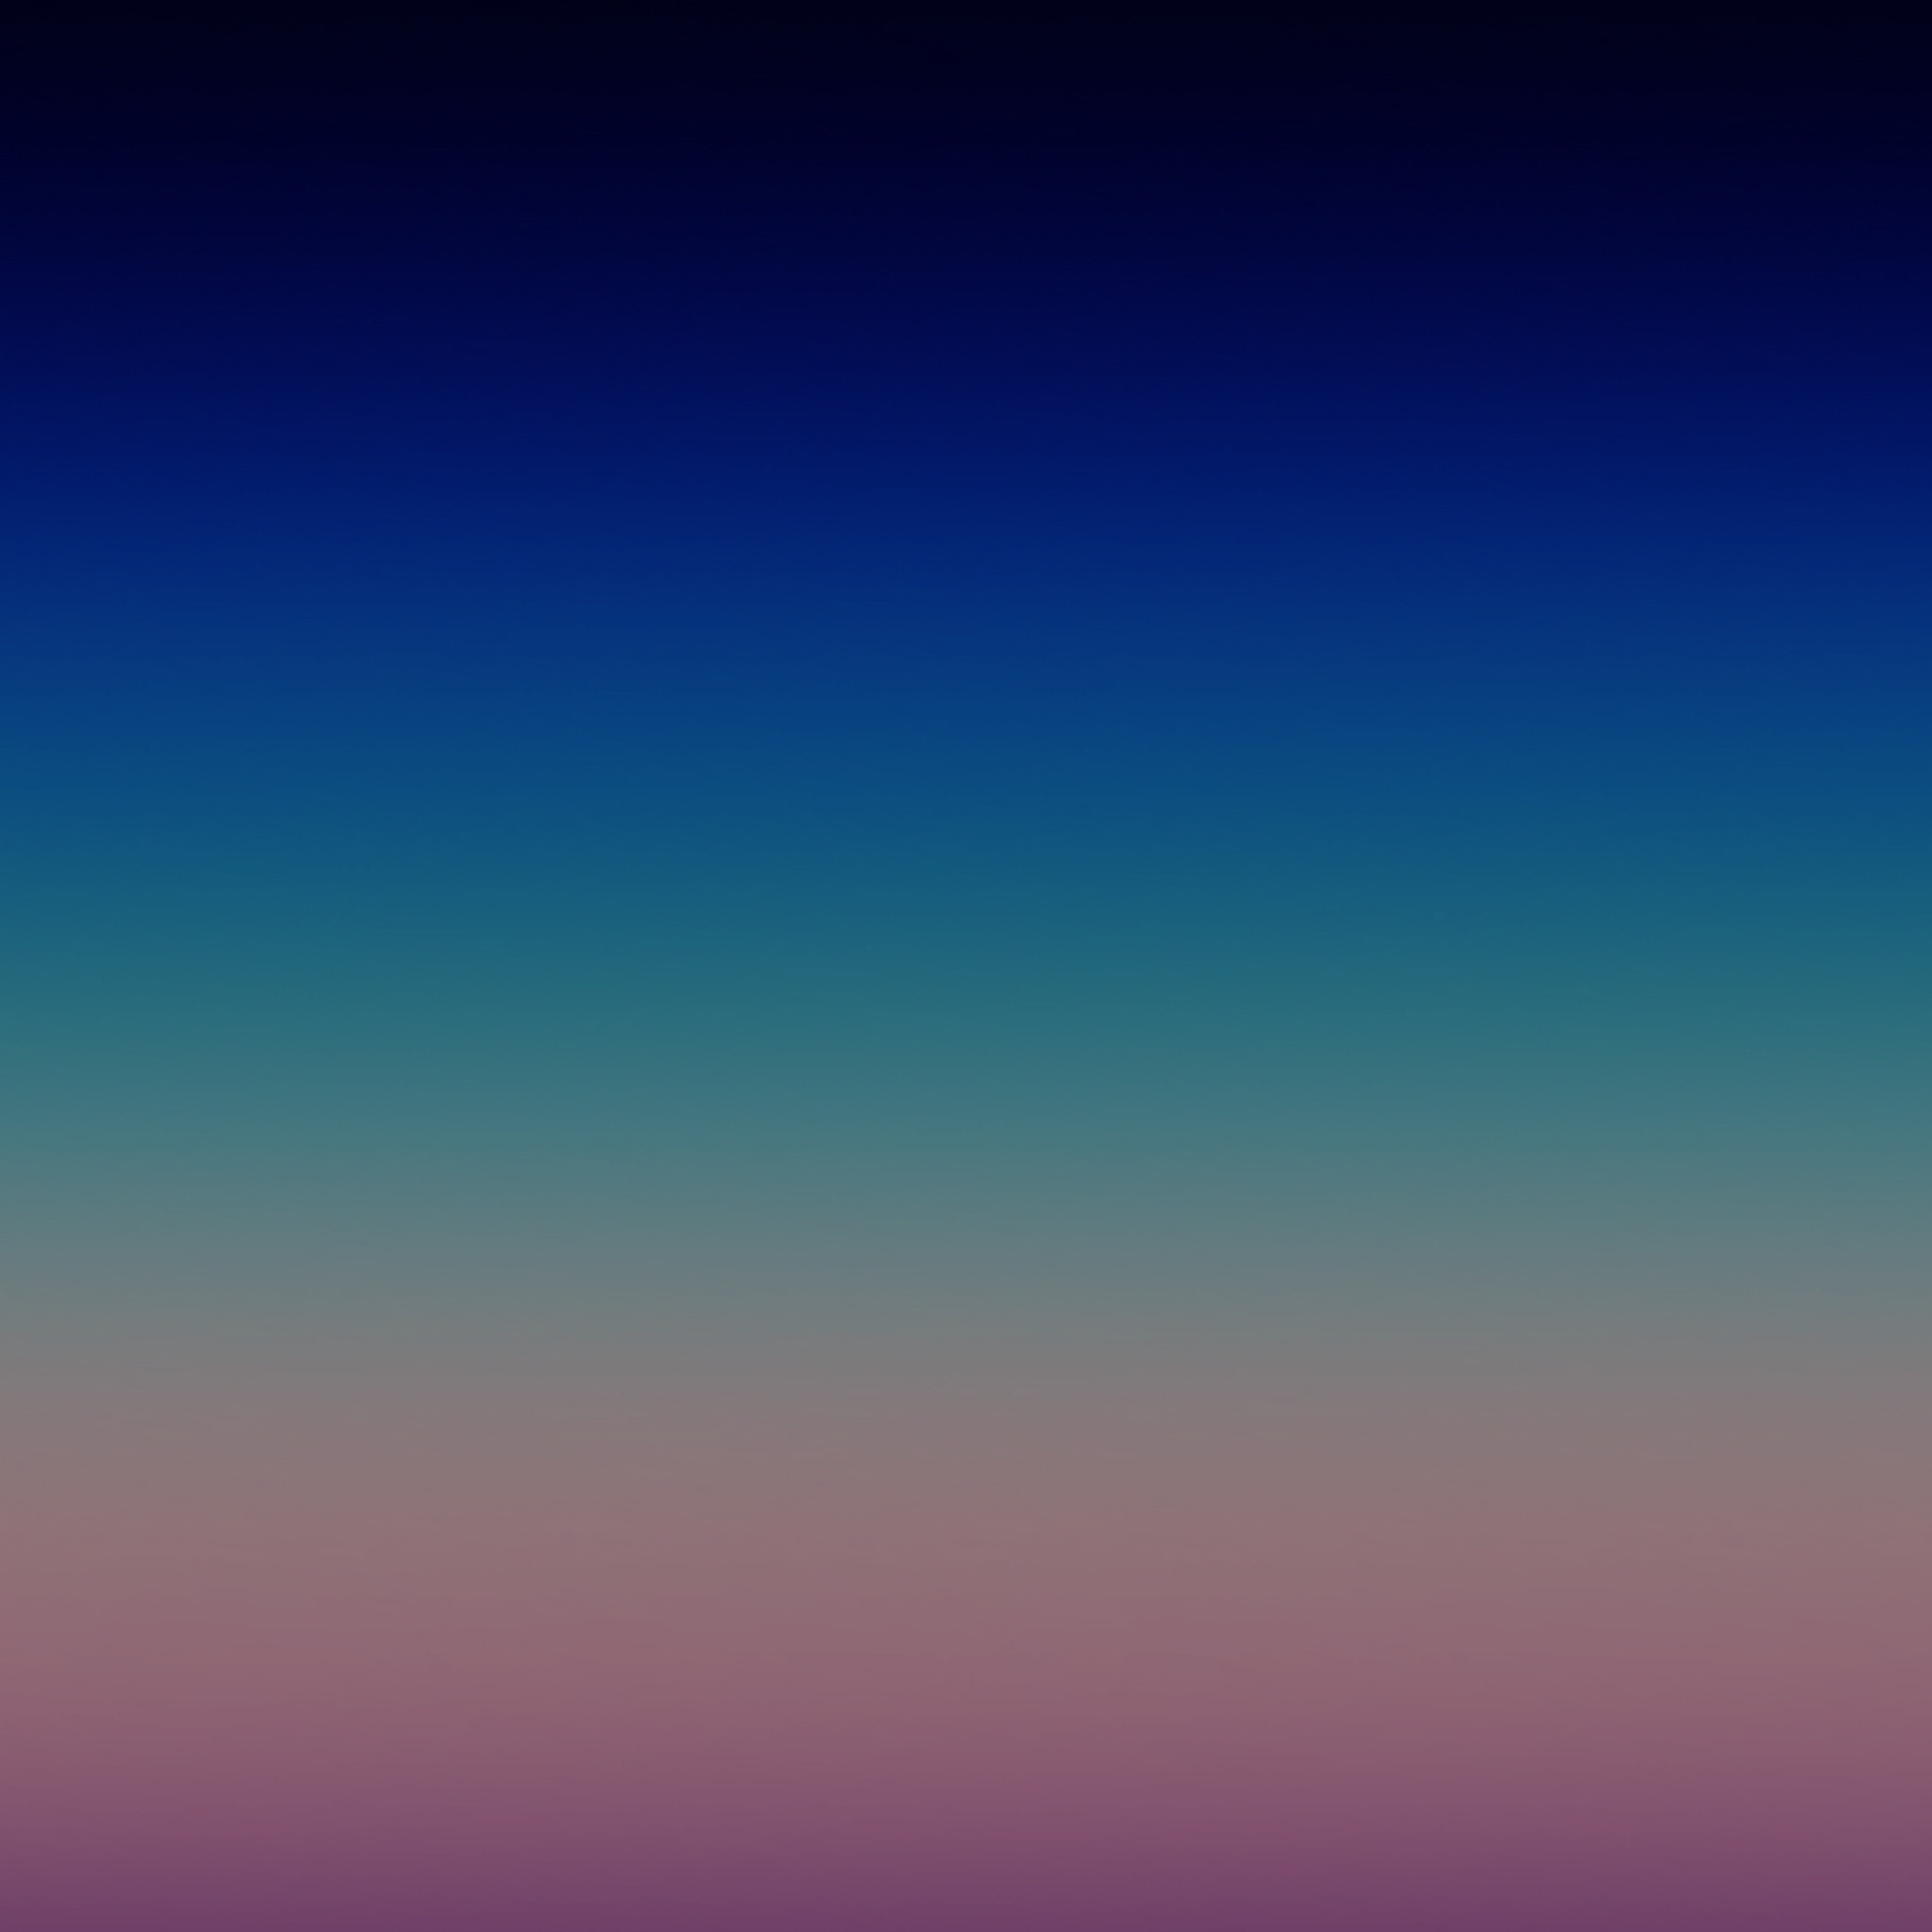 samsung galaxy a8 hd wallpaper,blue,sky,purple,daytime,violet